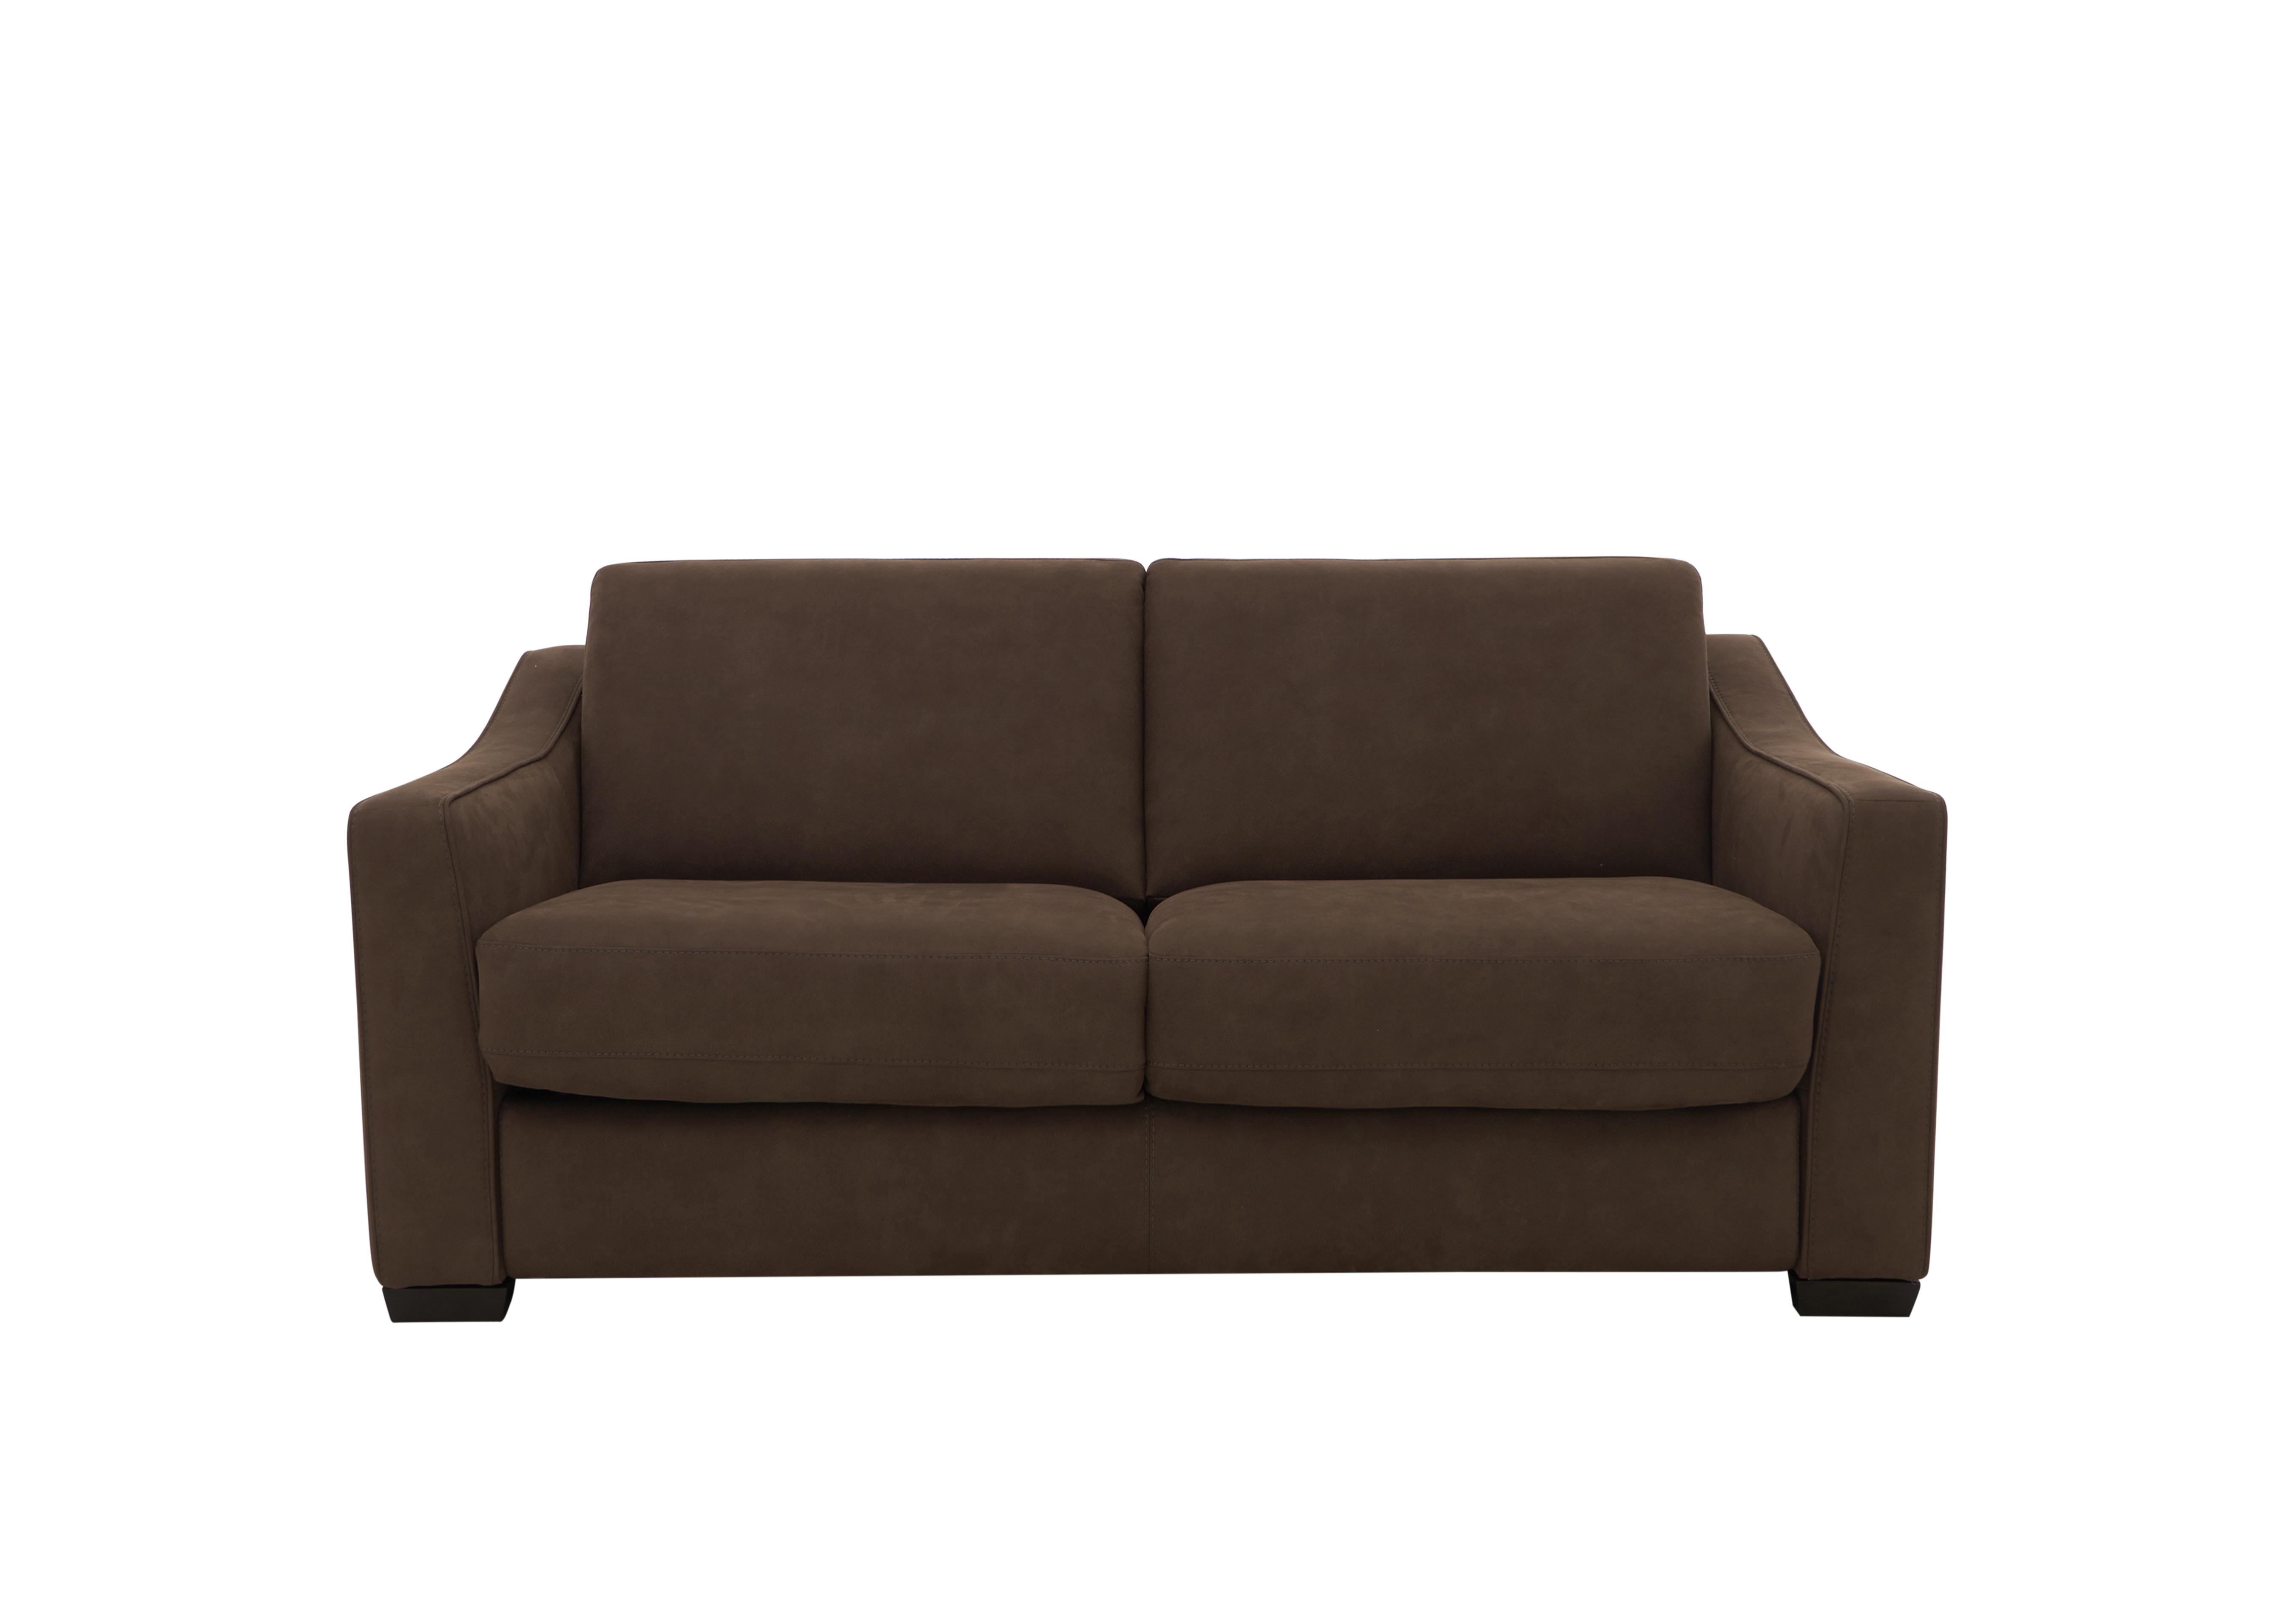 Optimus 2 Seater Fabric Sofa in Bfa-Blj-R05 Hazelnut on Furniture Village